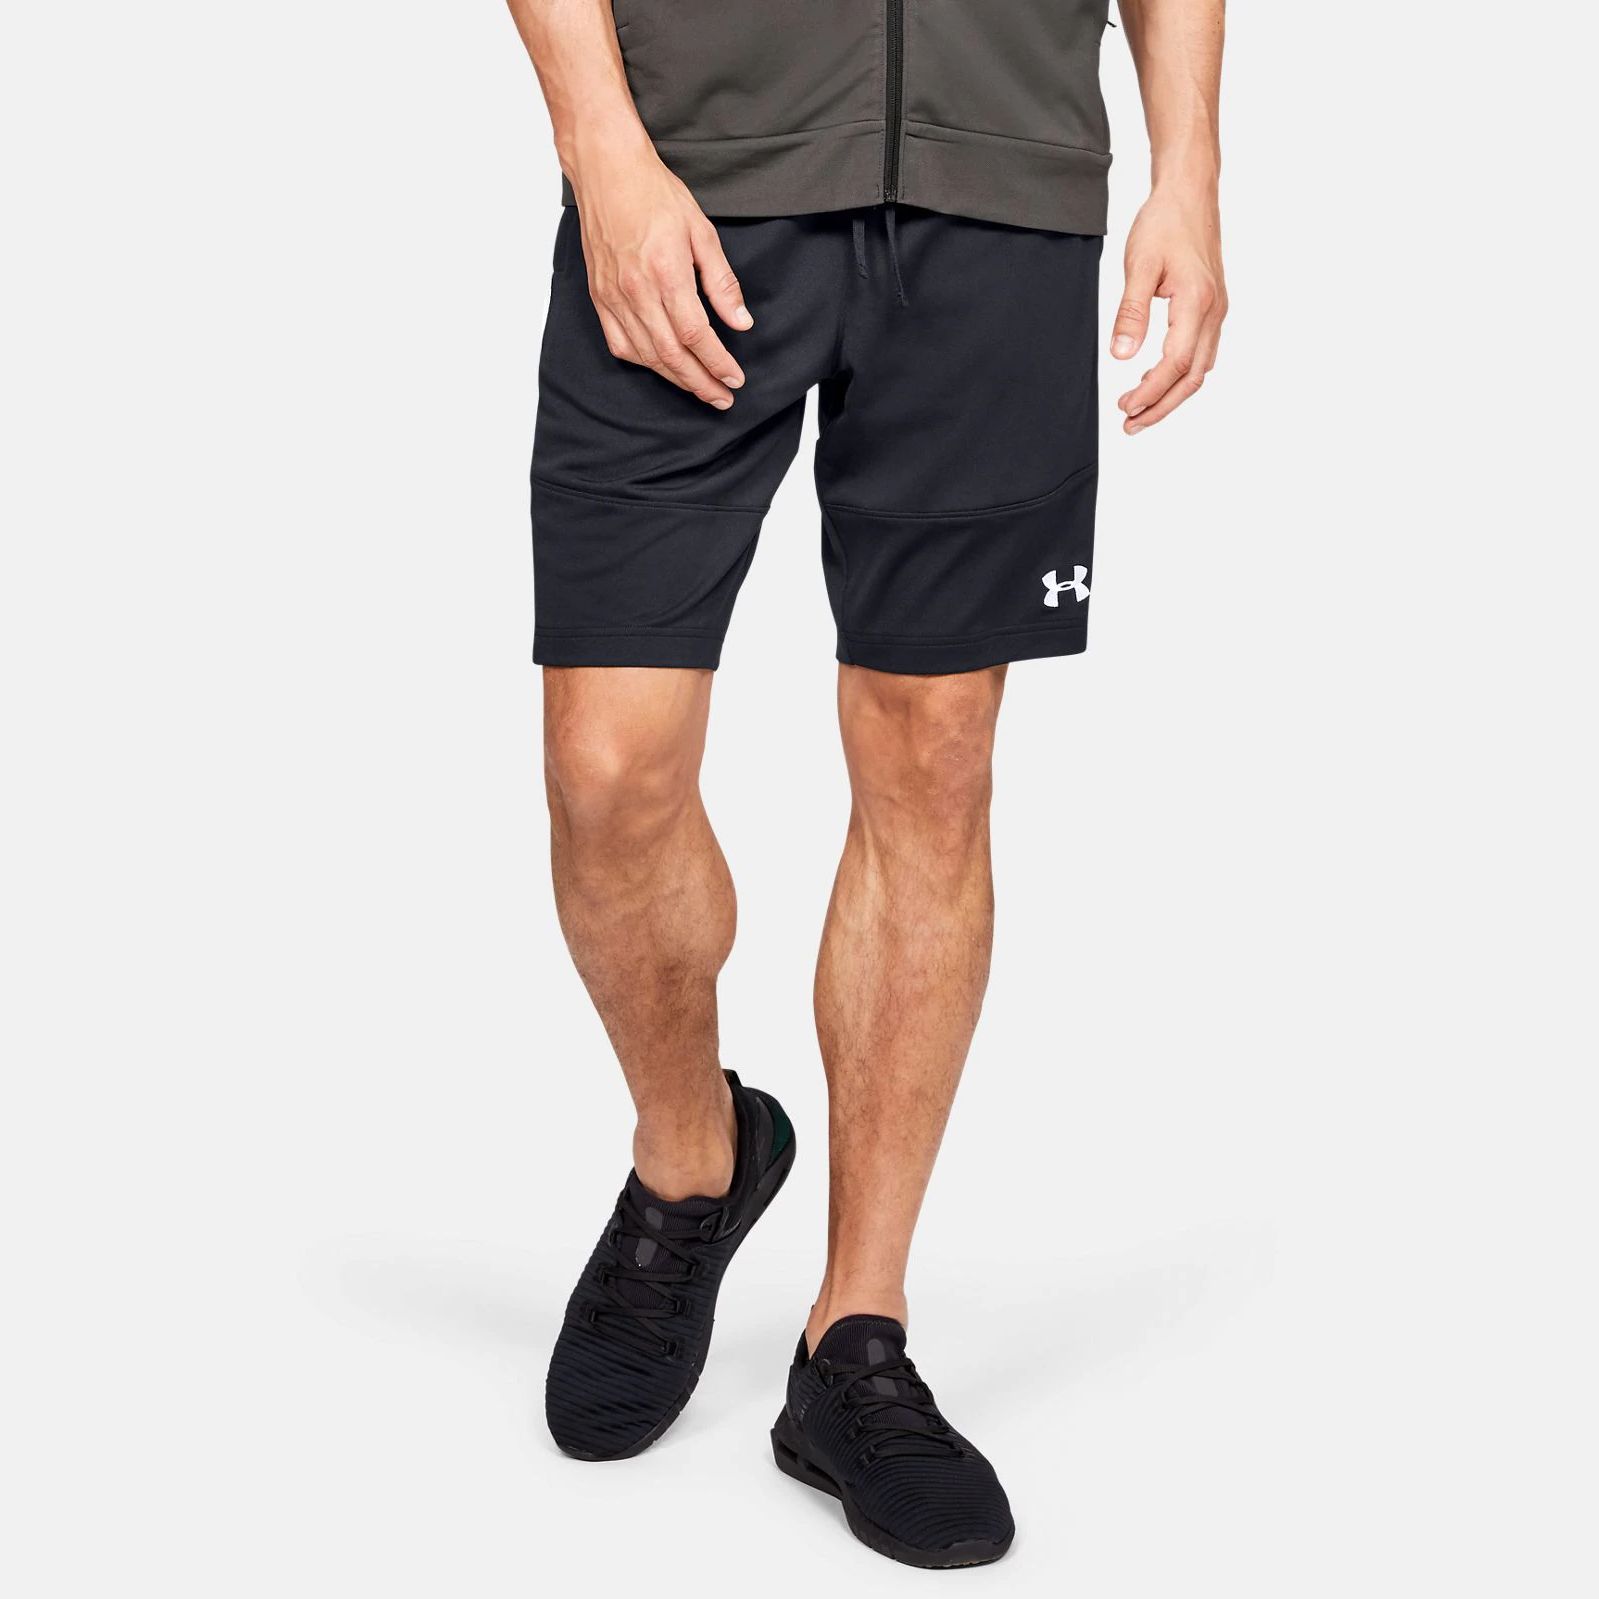 Shorts -  under armour UA Sportstyle Pique Shorts 9295